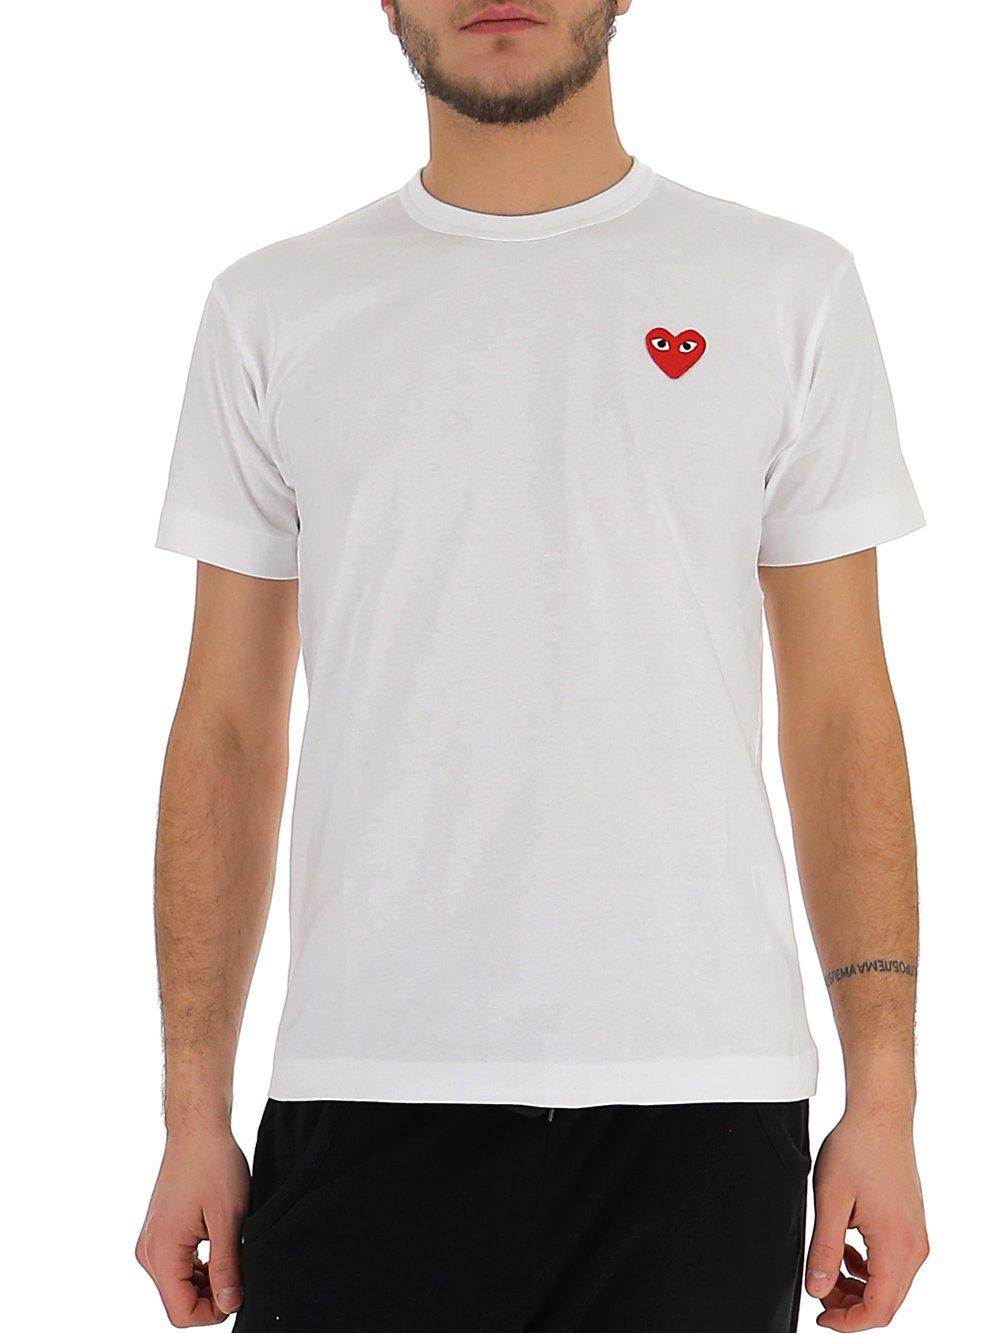 COMME DES GARÇONS PLAY Basic Logo T-shirt in White for Men - Save 11% ...